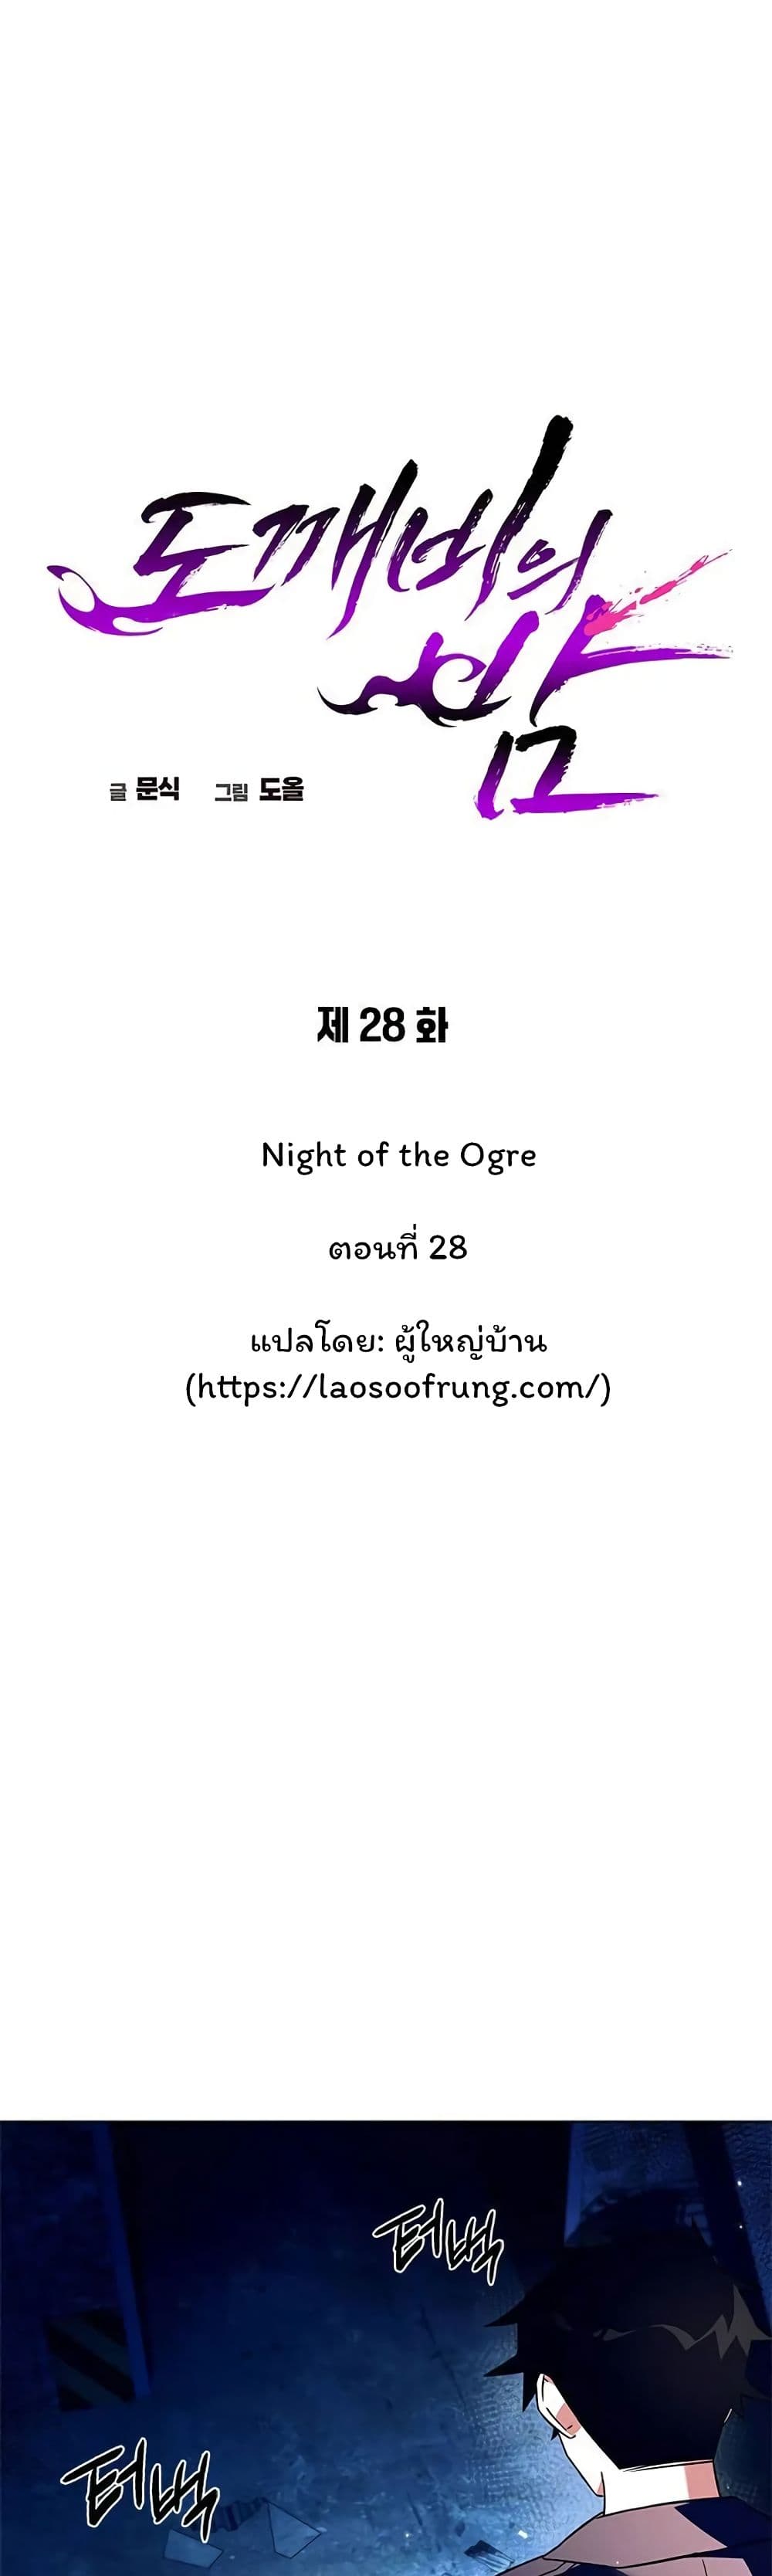 Night of the Ogre 29-29